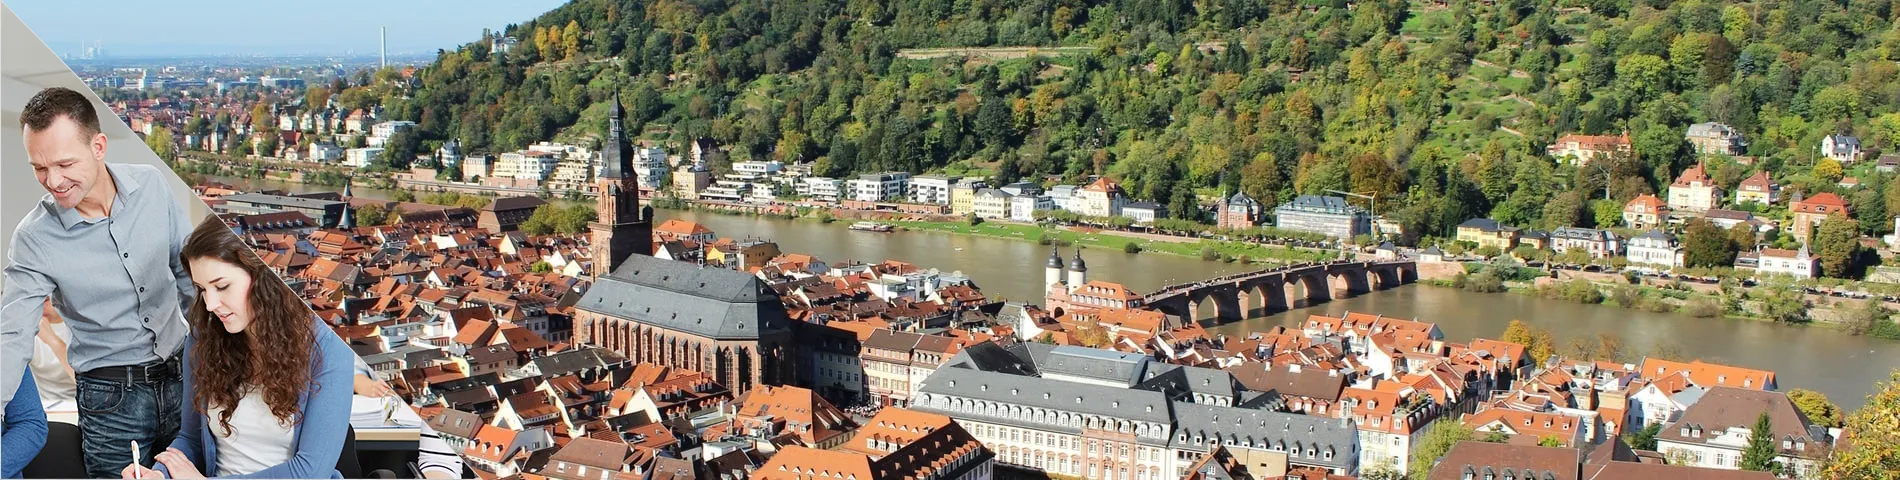 Heidelberg - Combi: Gruppo+Indiv